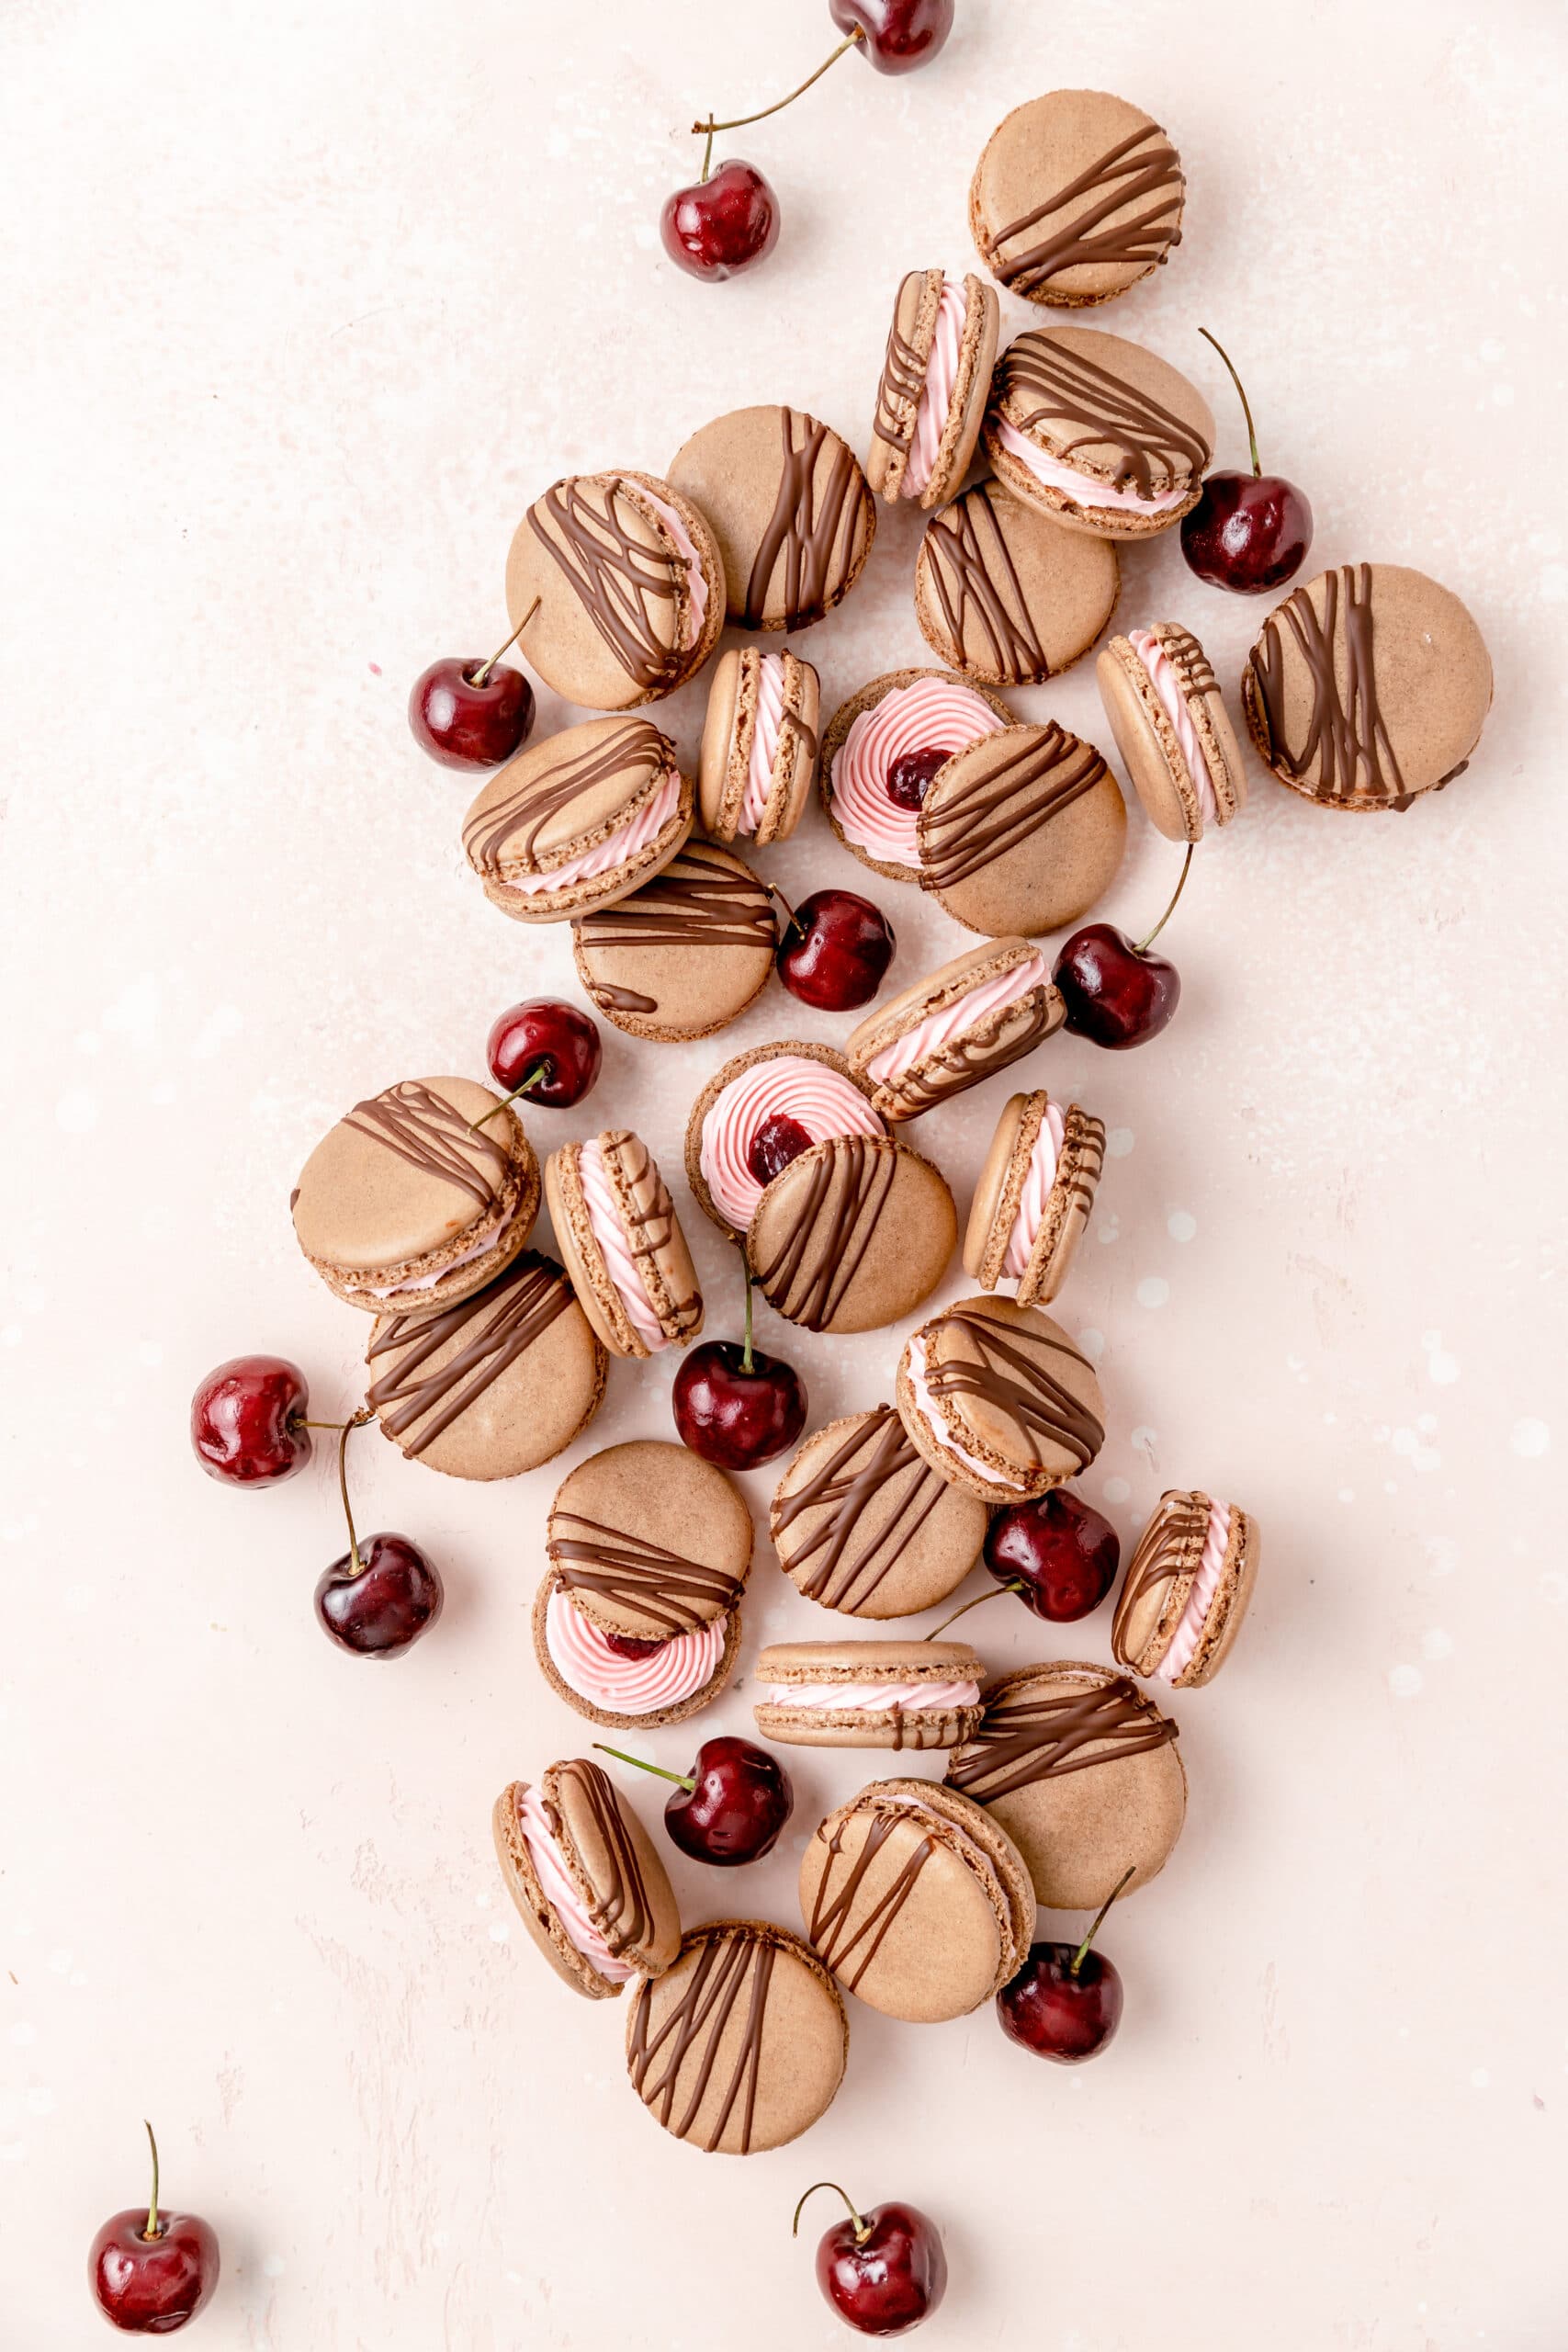 chocolate cherry macarons drizzled with dark chocolate.